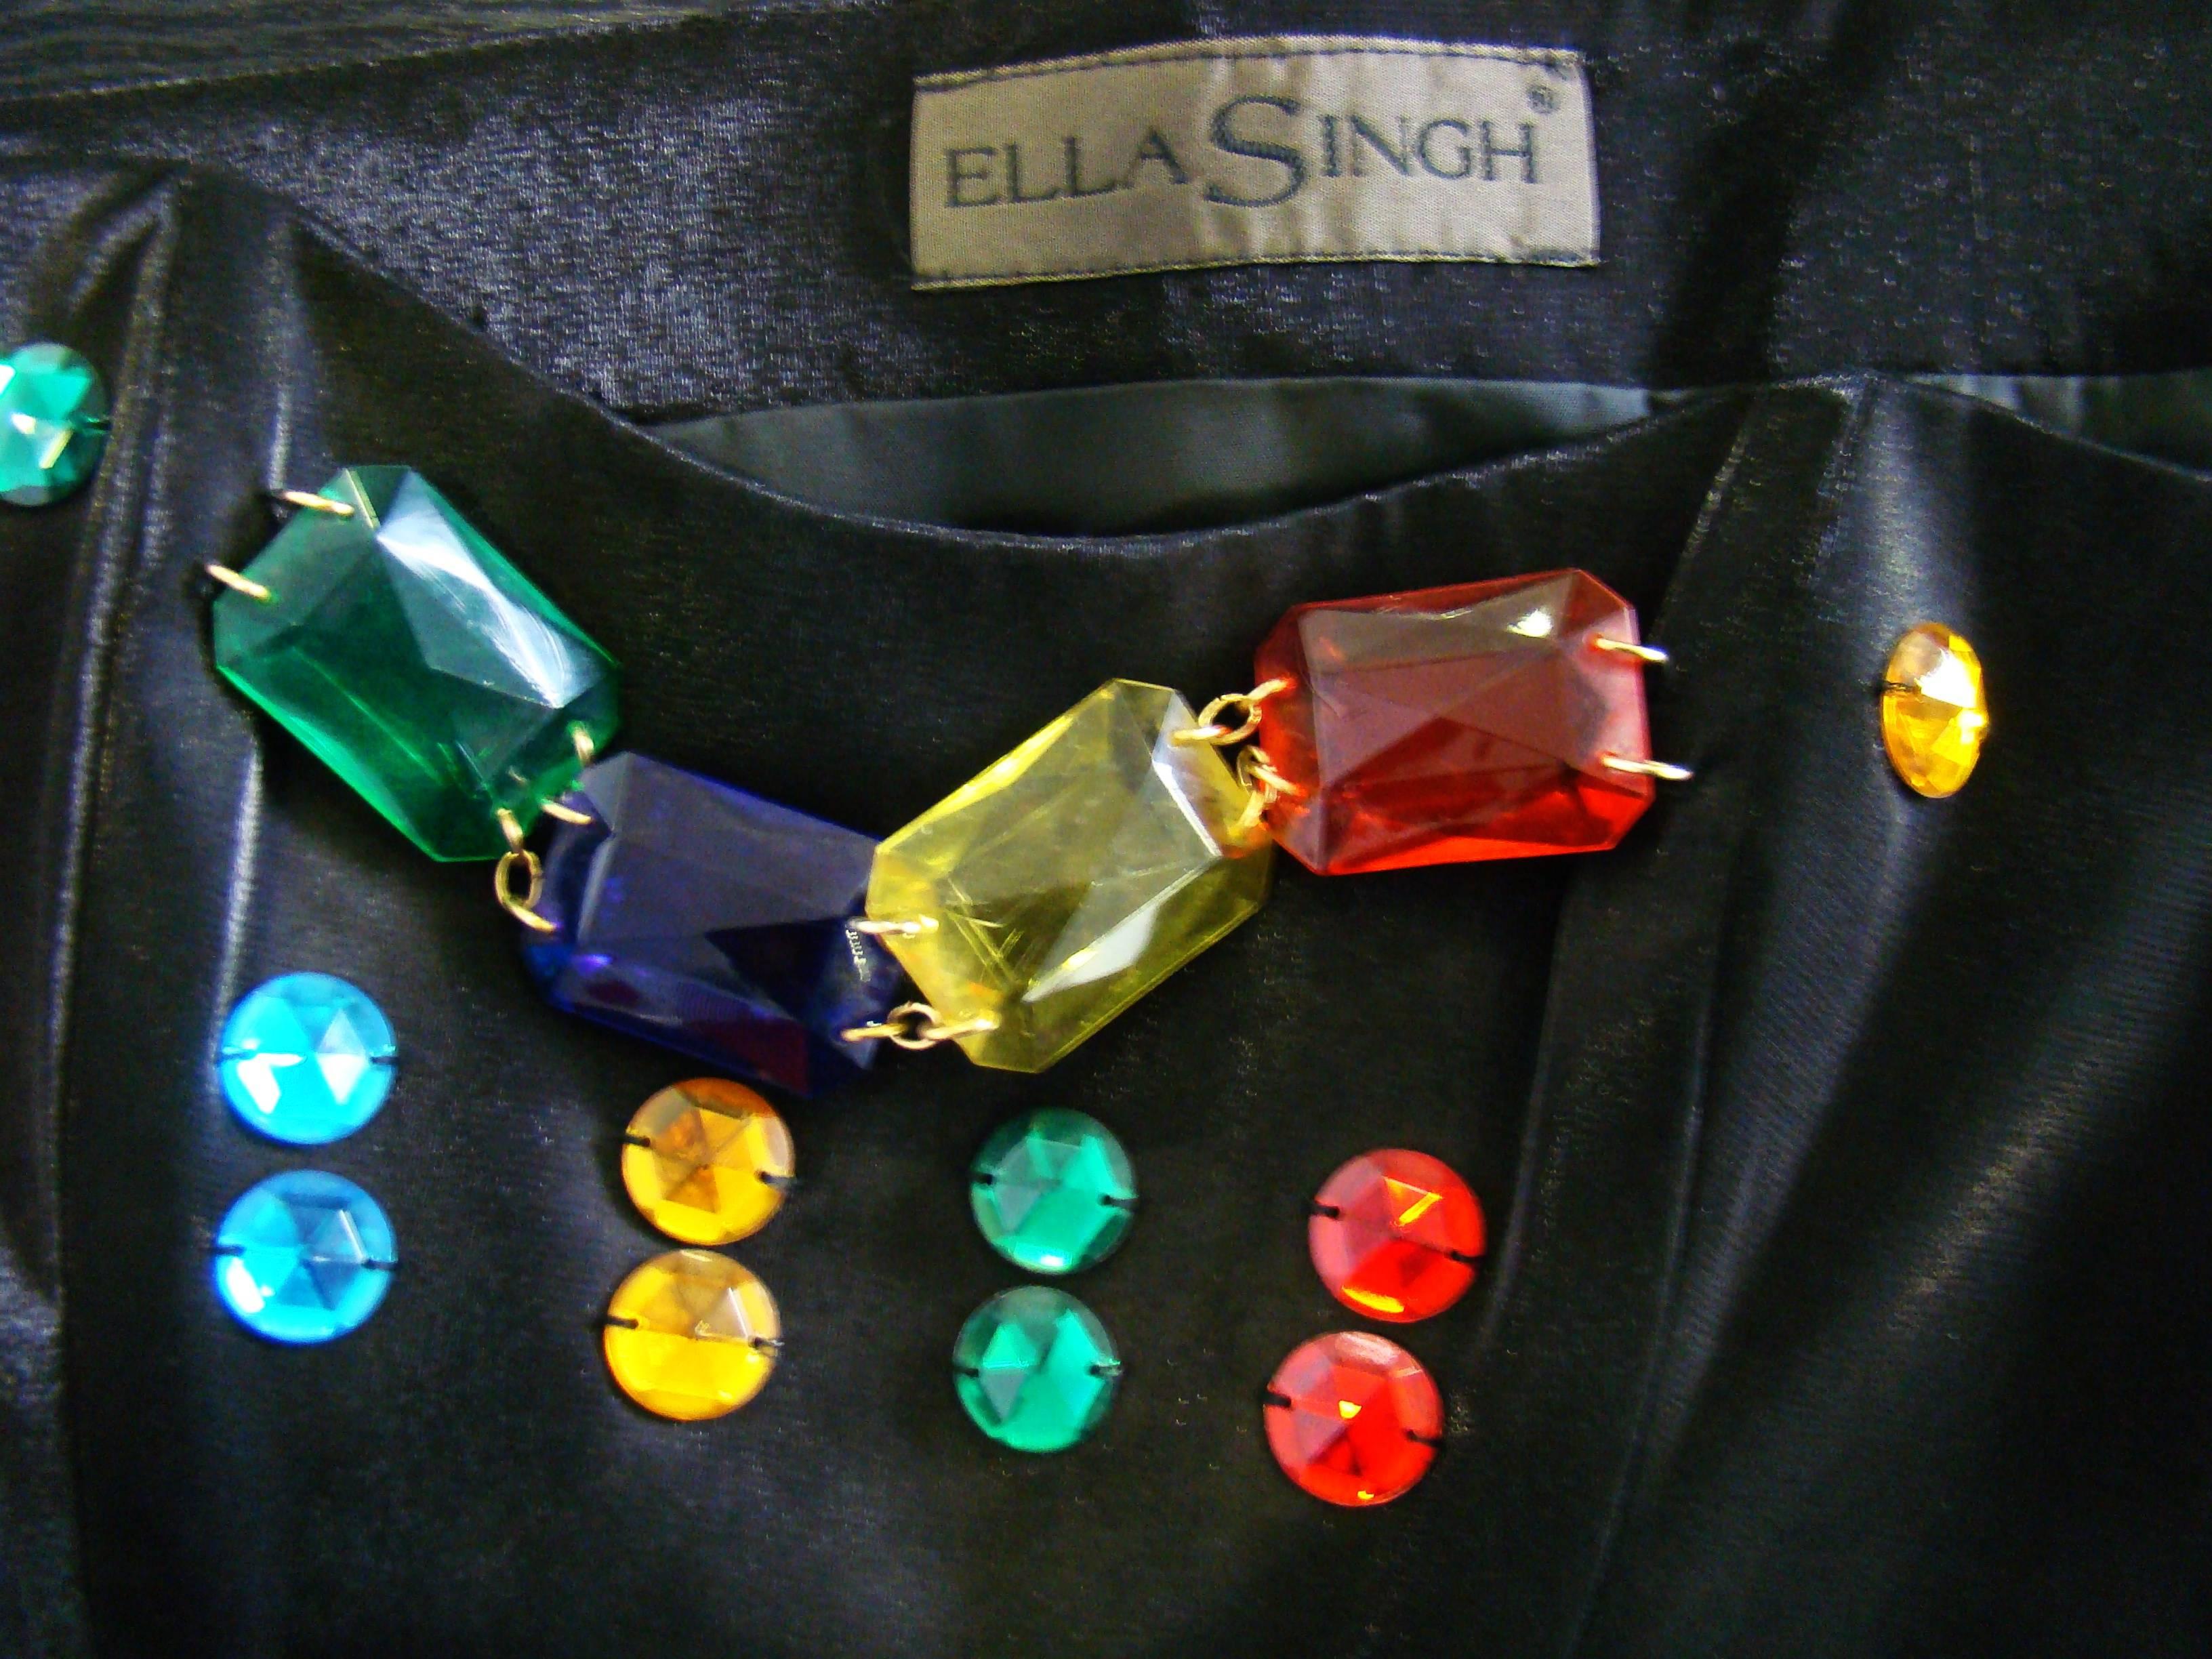 Women's Rare Ella Singh Bustier Top With Multicolored Stones For Sale